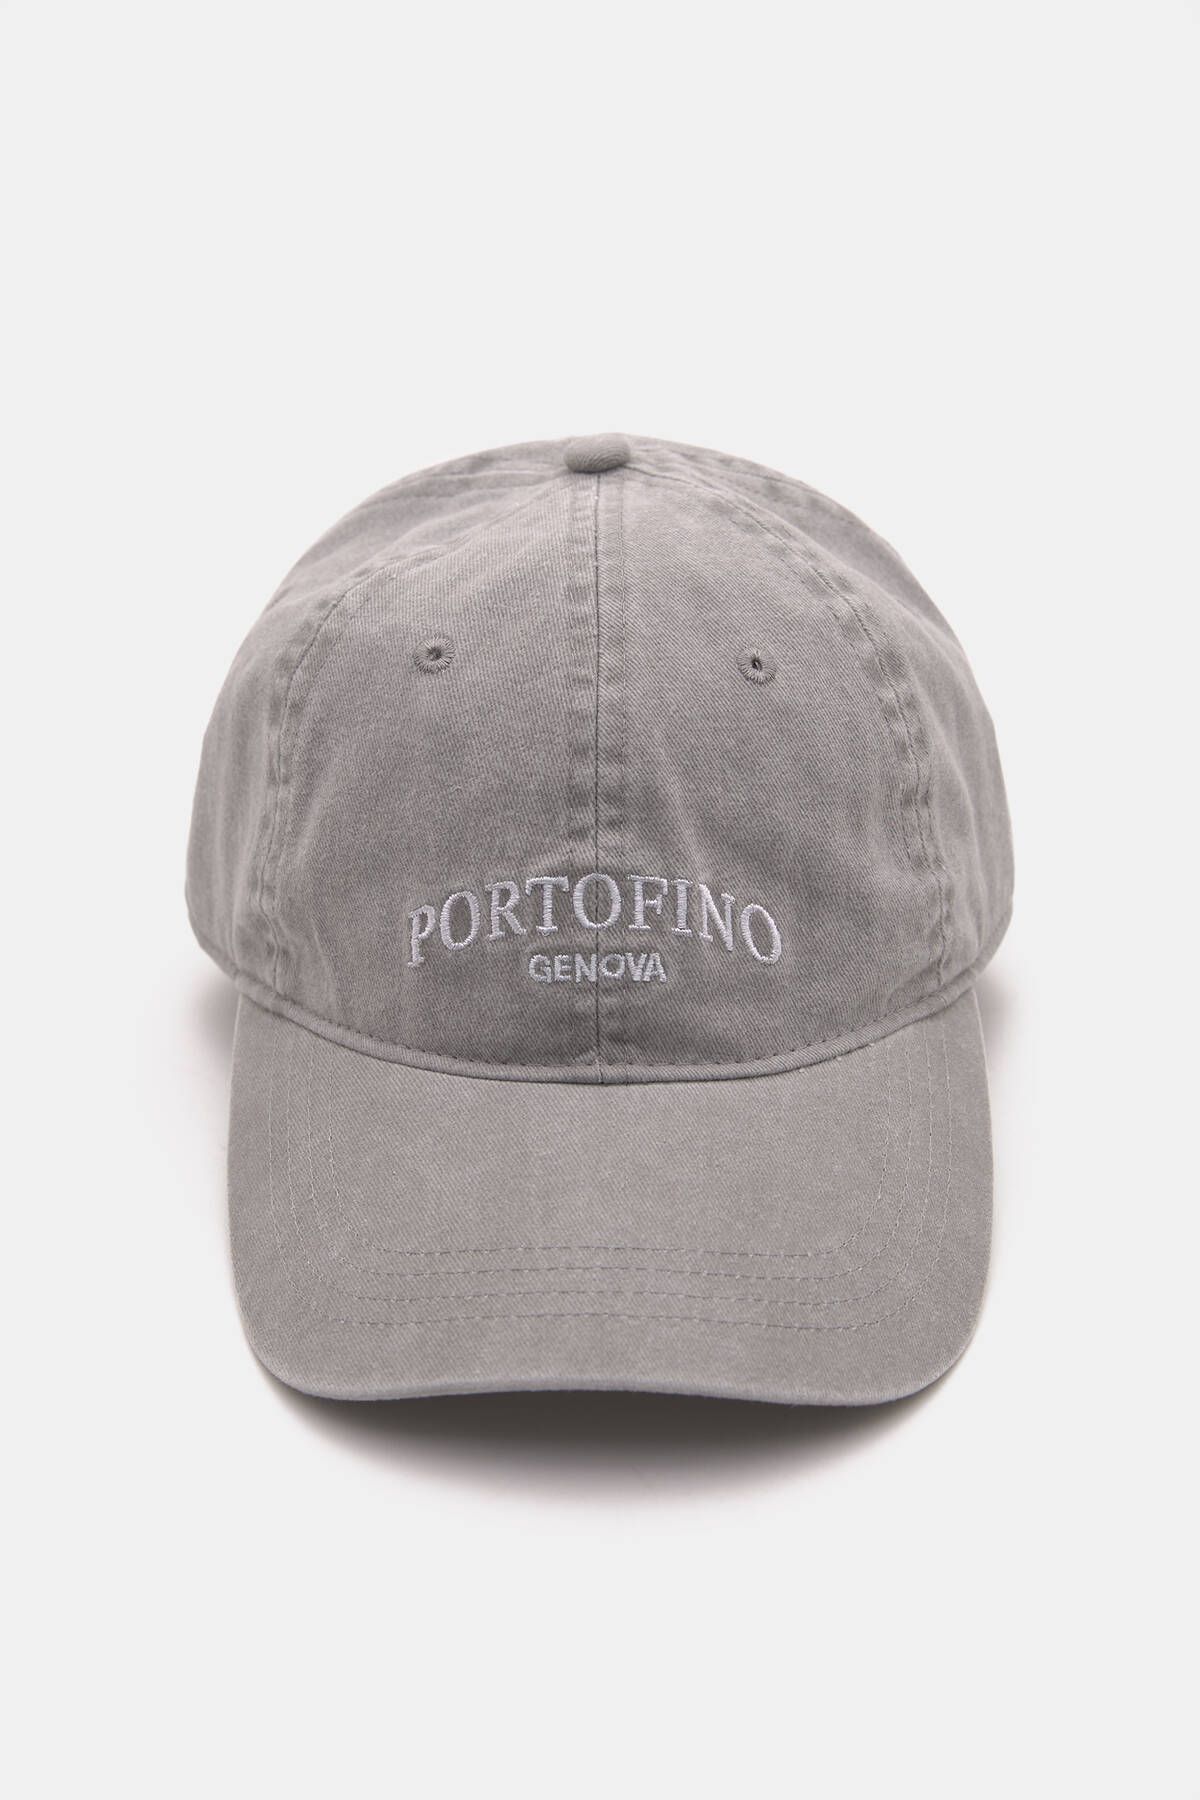 Pull & Bear Portofino şapka